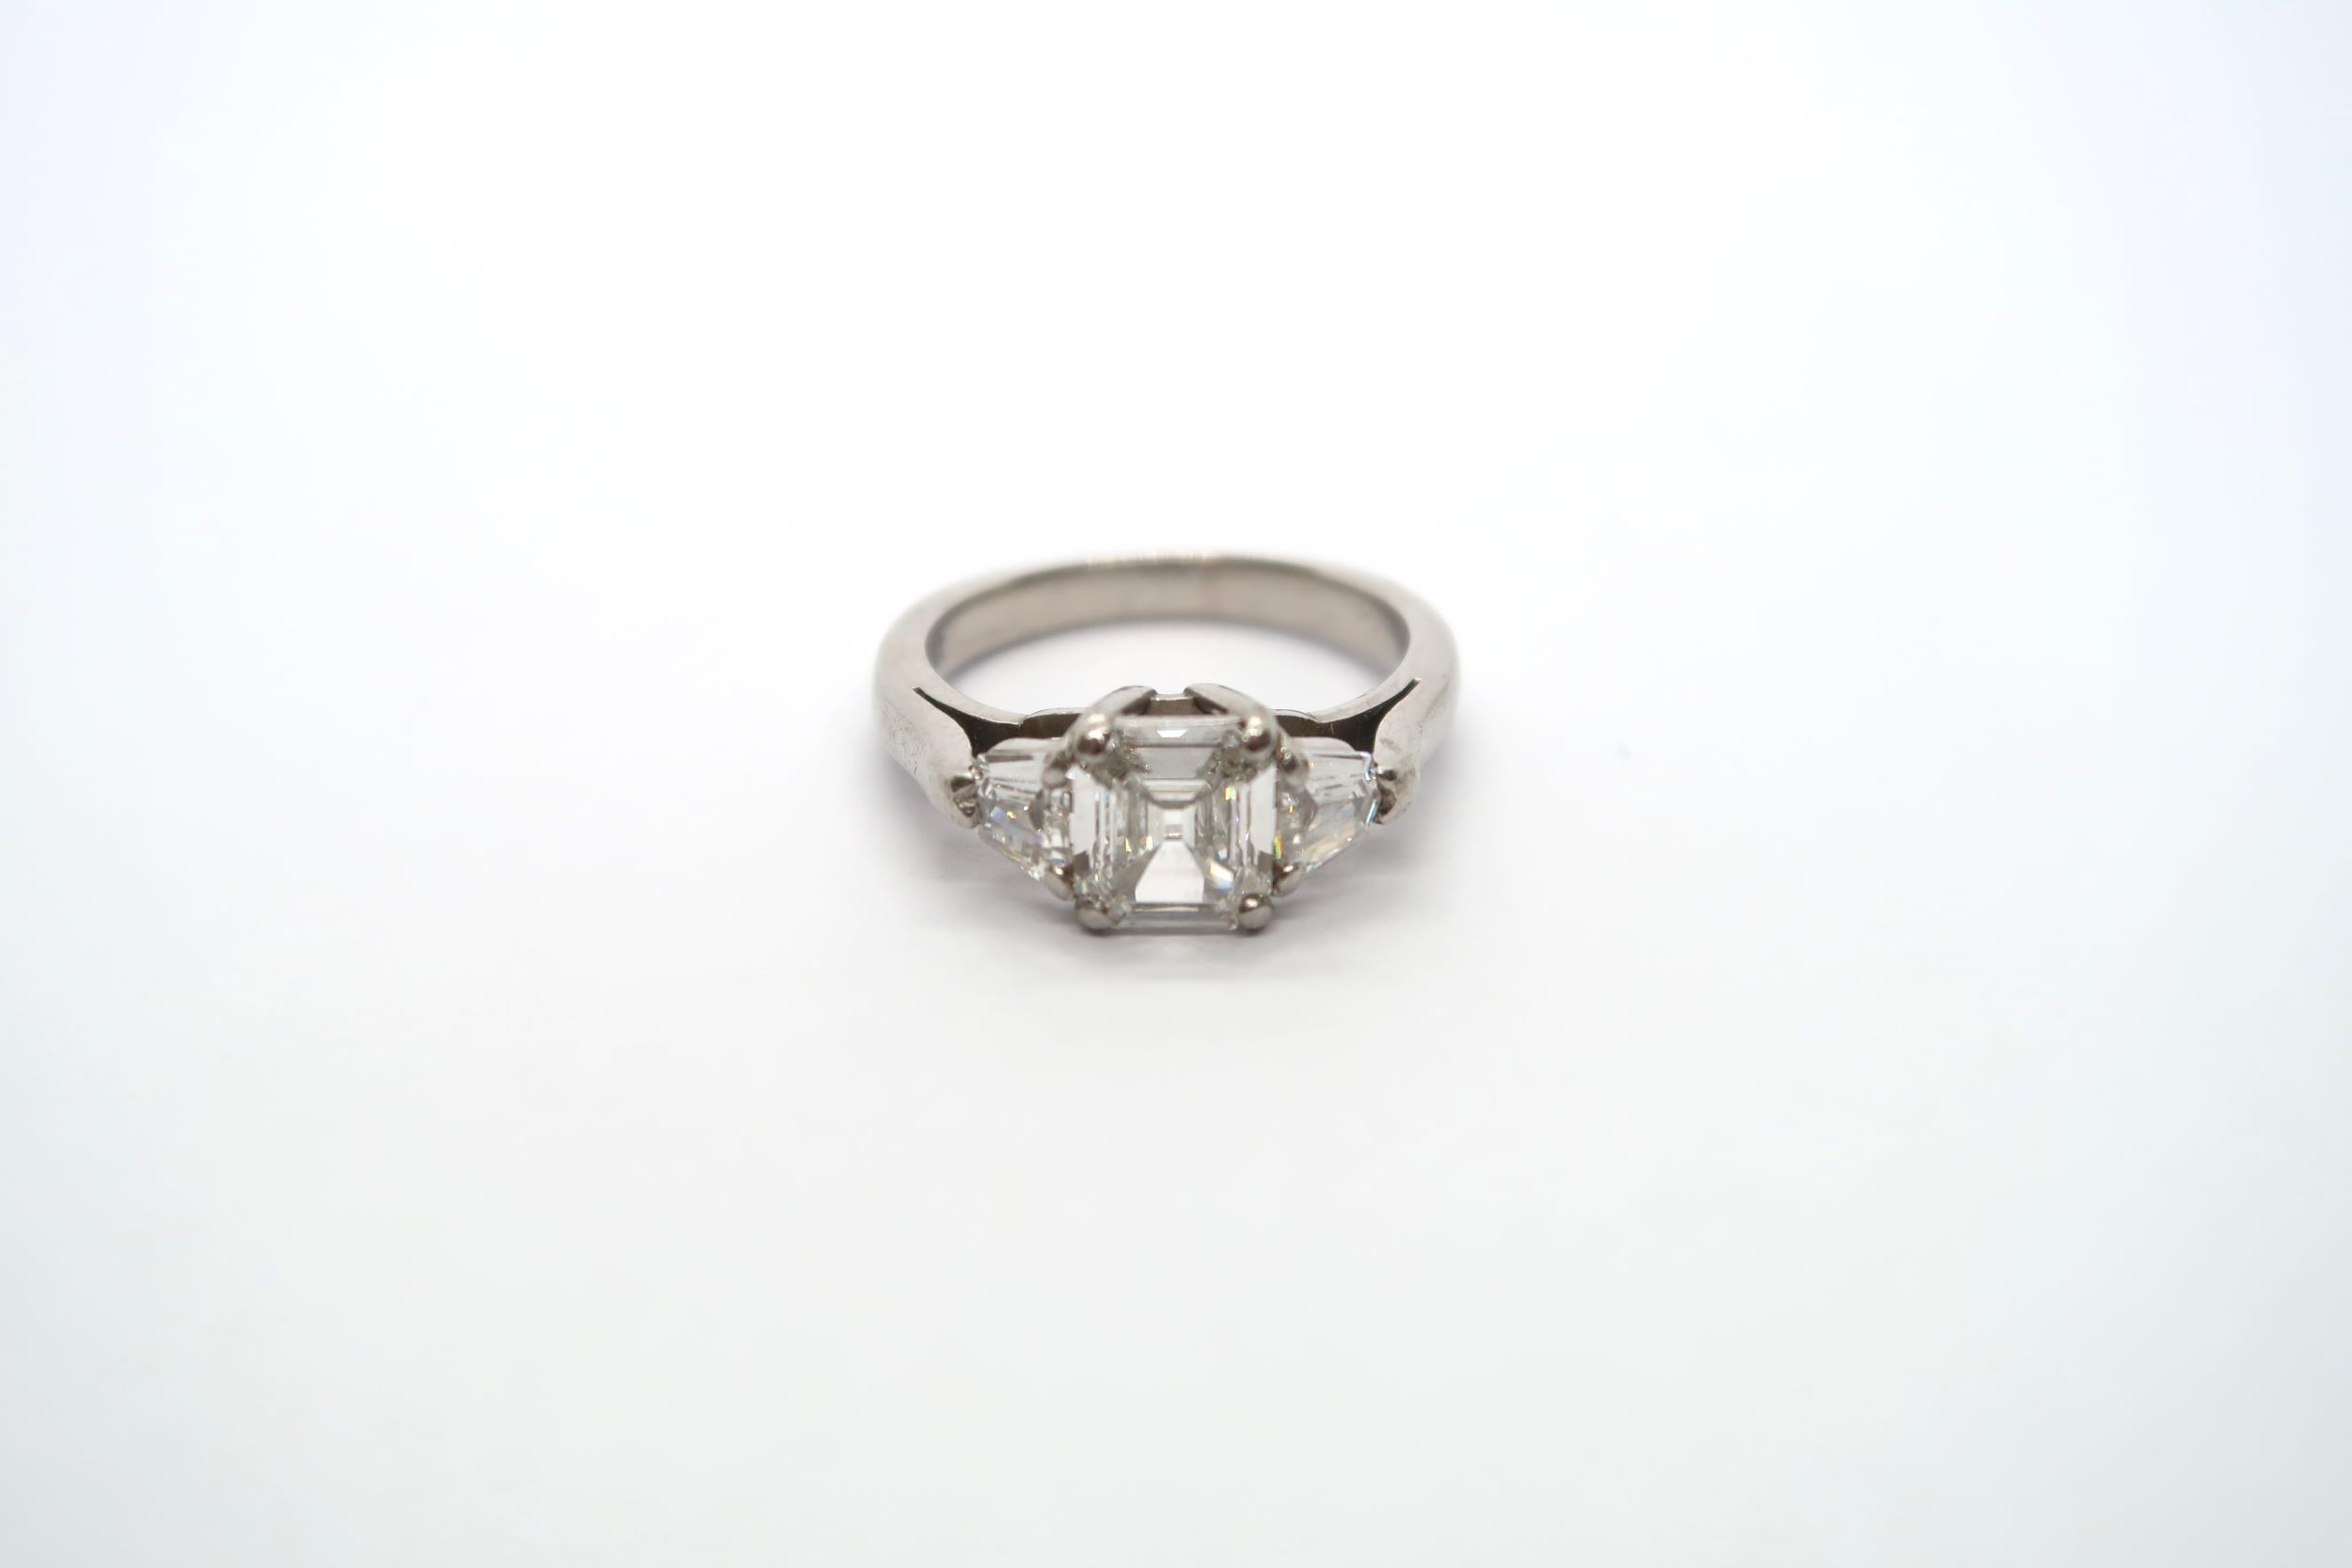 A very good platinum three stone diamond ring - The square emerald cut diamond estimated 1.1ct